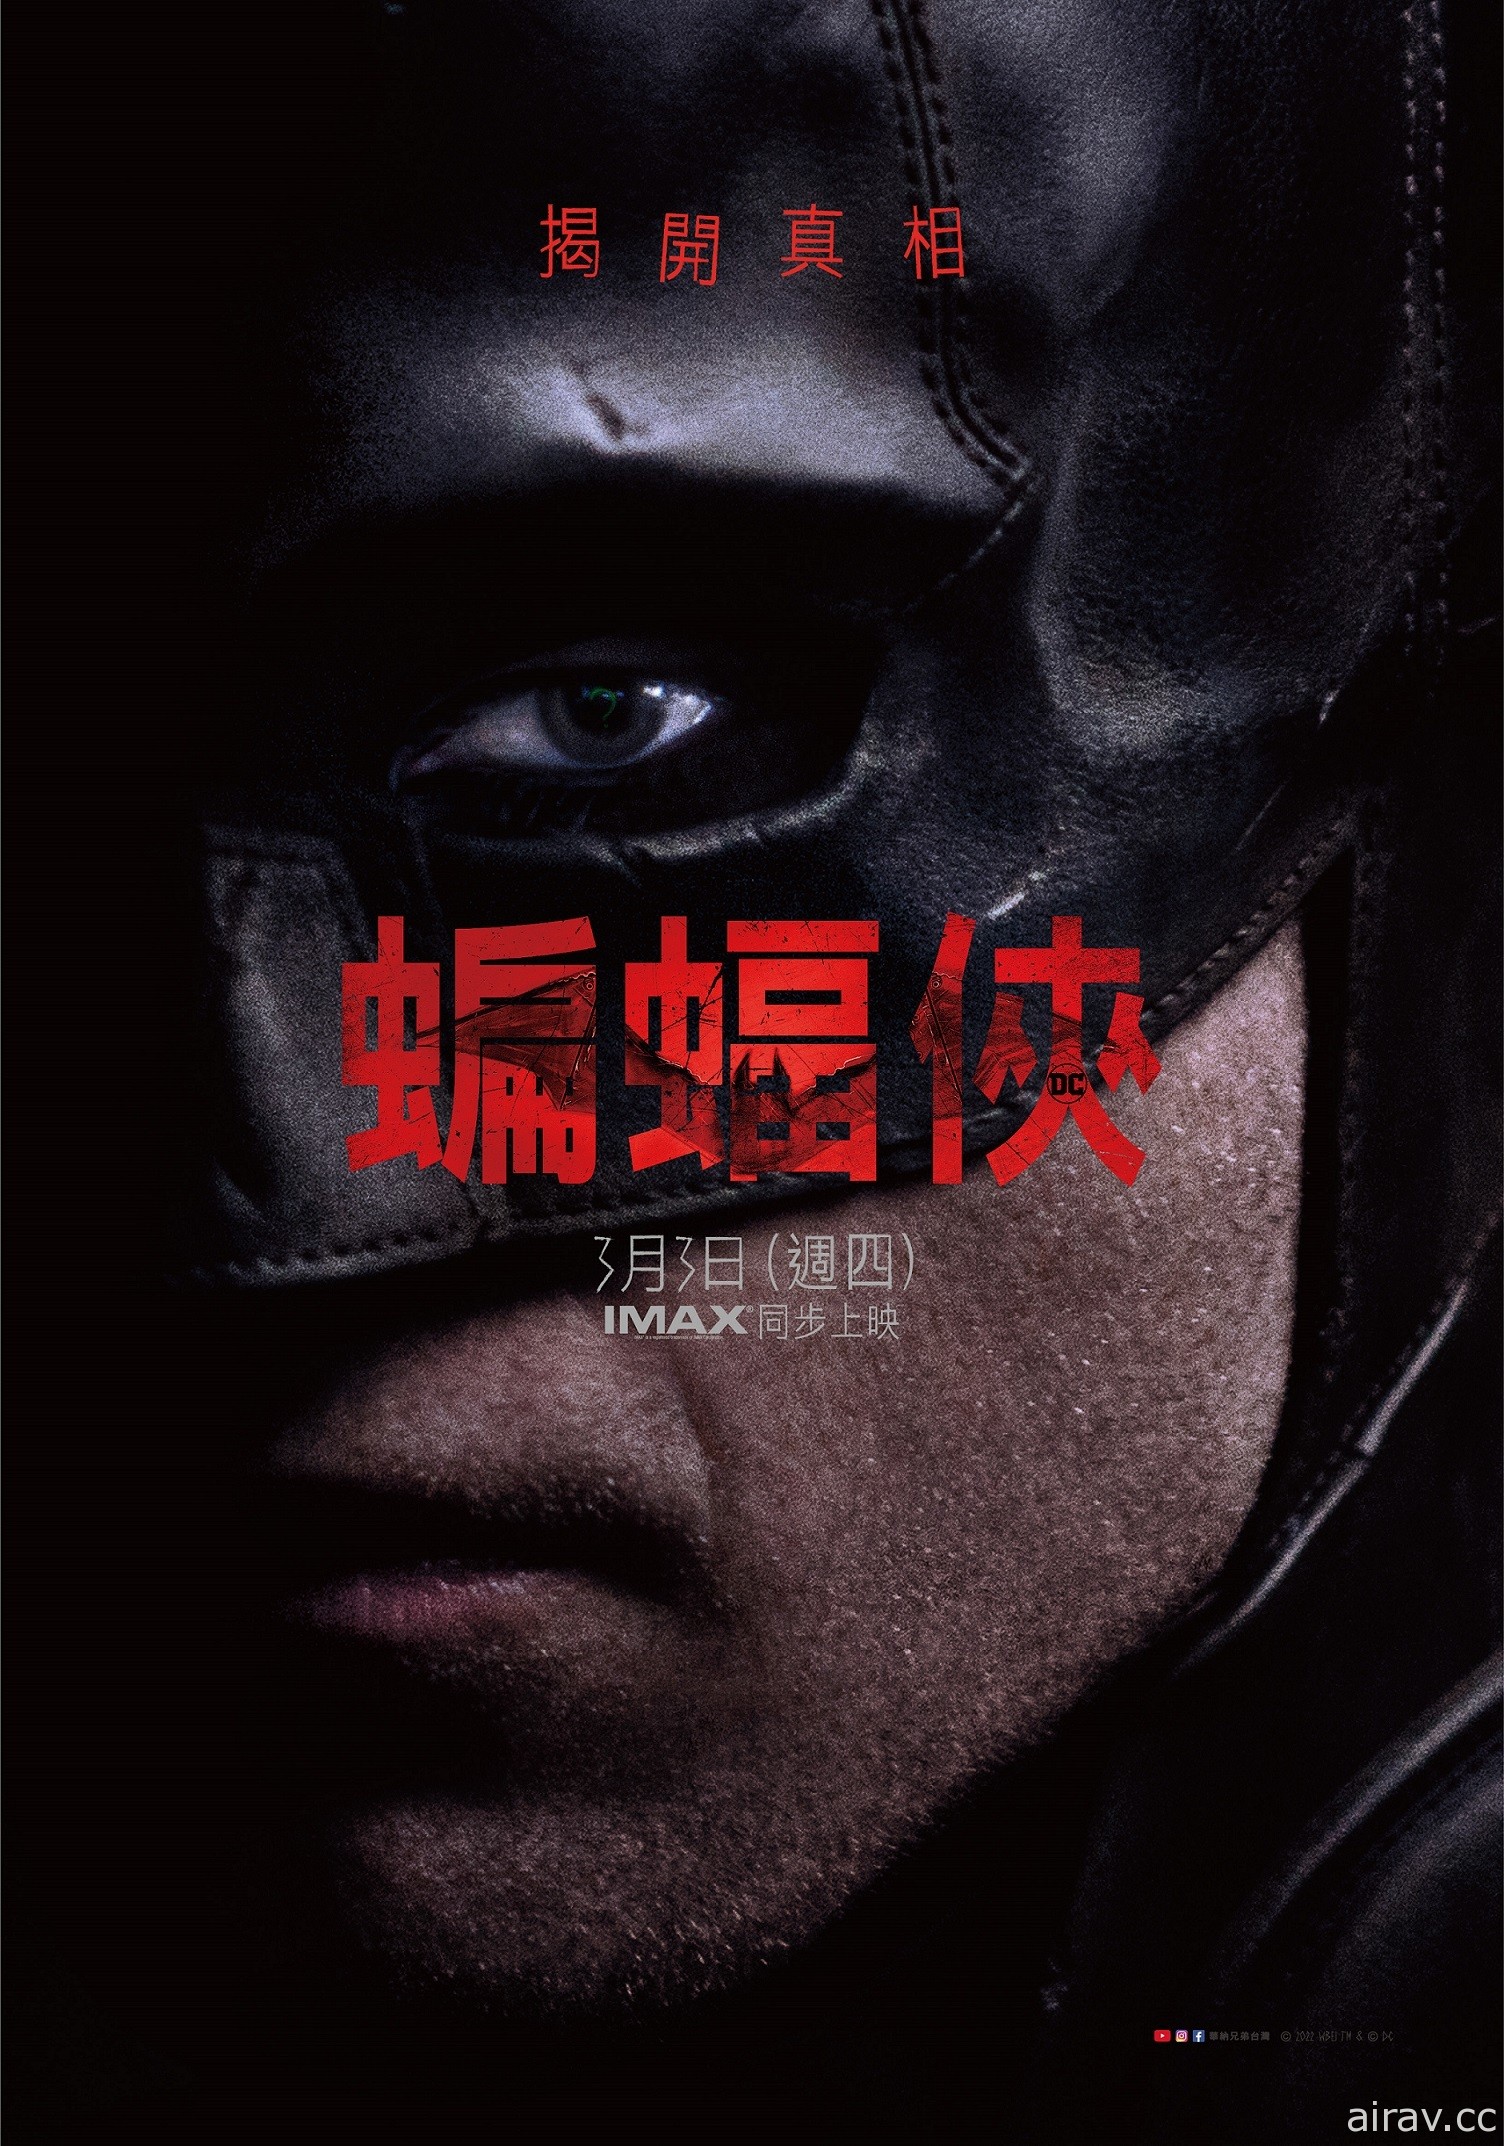 【TiCA22】《蝙蝠俠》電影攤位將現身台北國際動漫節 帶領粉絲探索高譚市